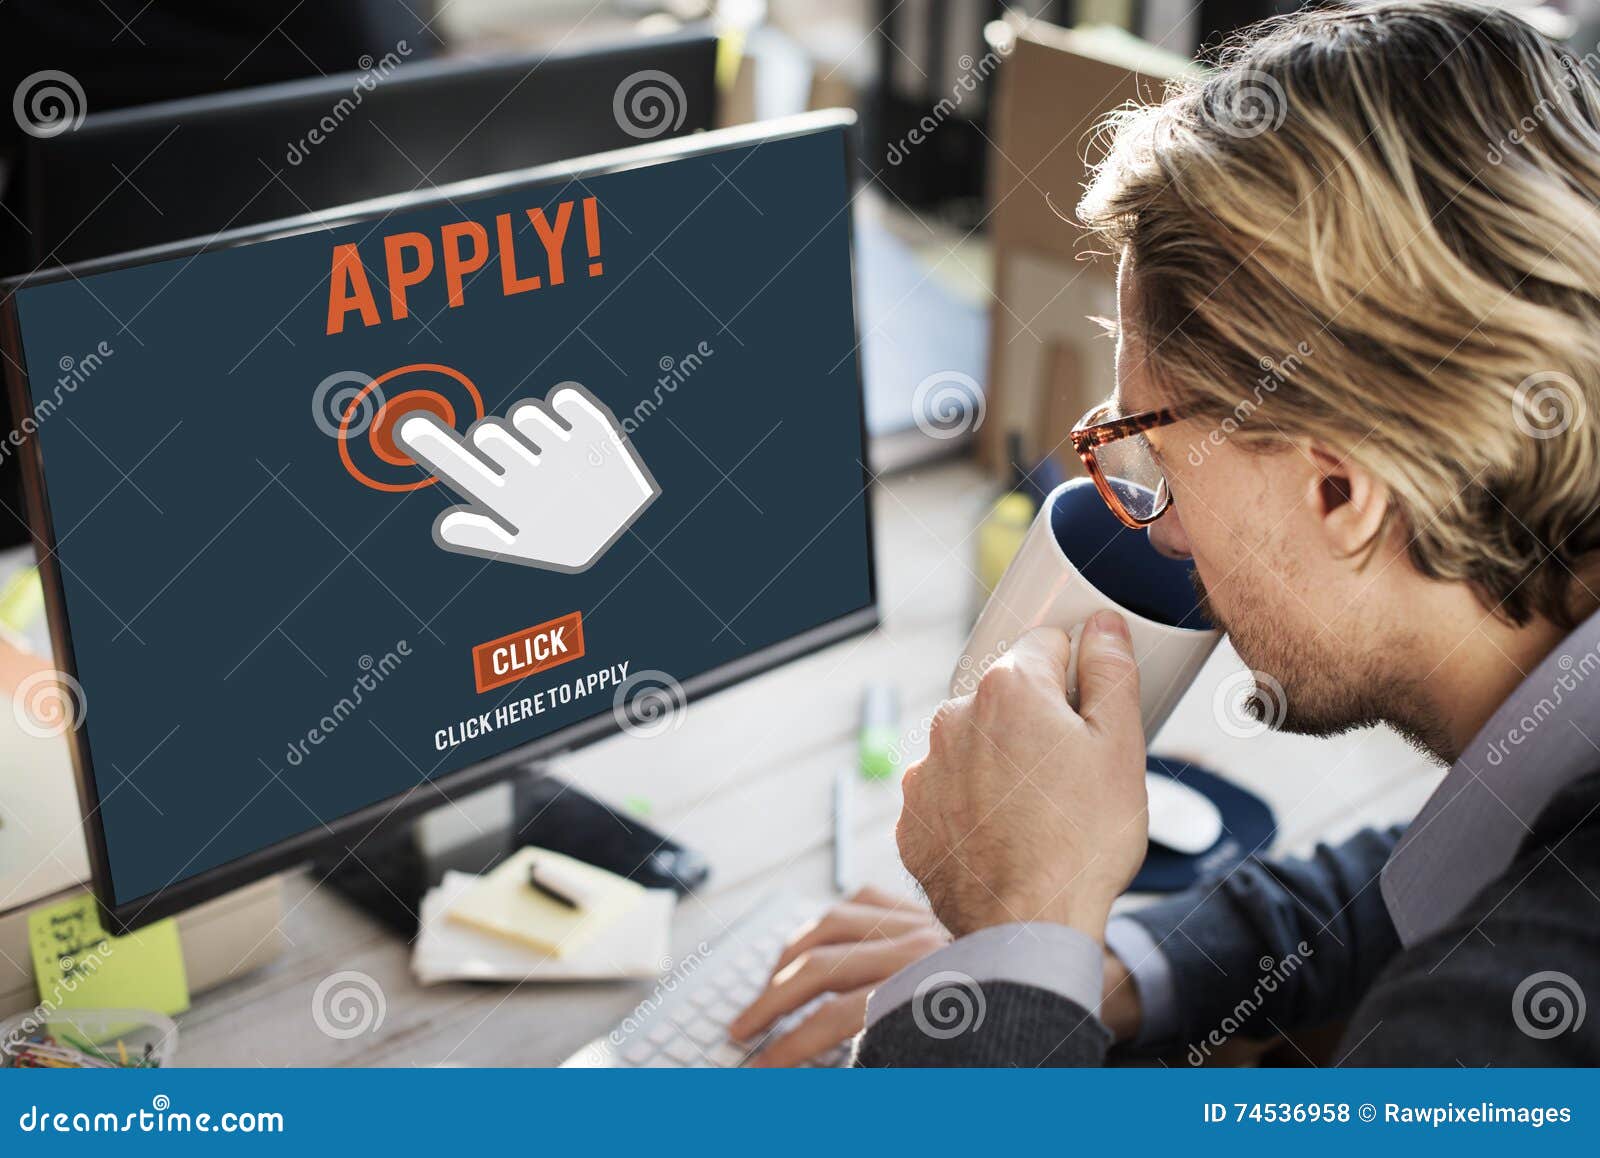 apply here apply online job concept